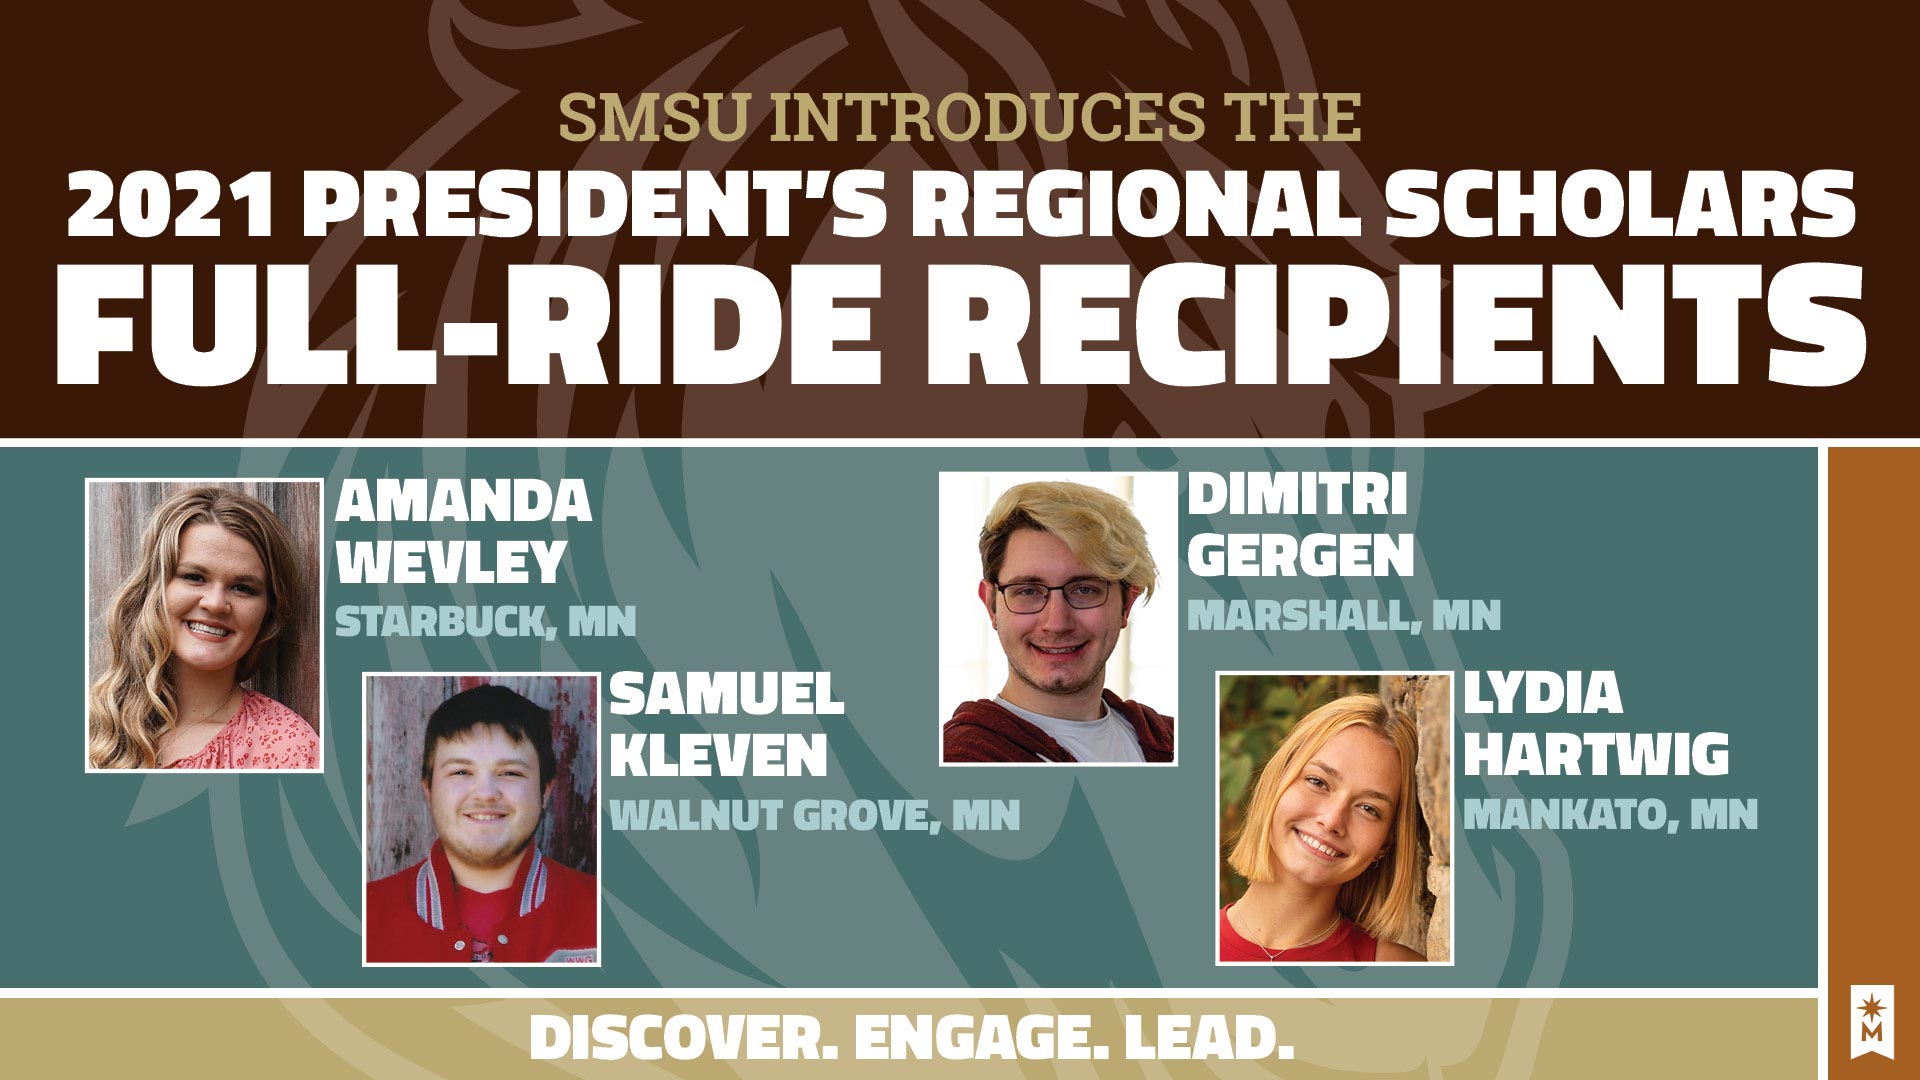 Surprising the 2021 SMSU President's Regional Scholar Full-Ride Recipients!